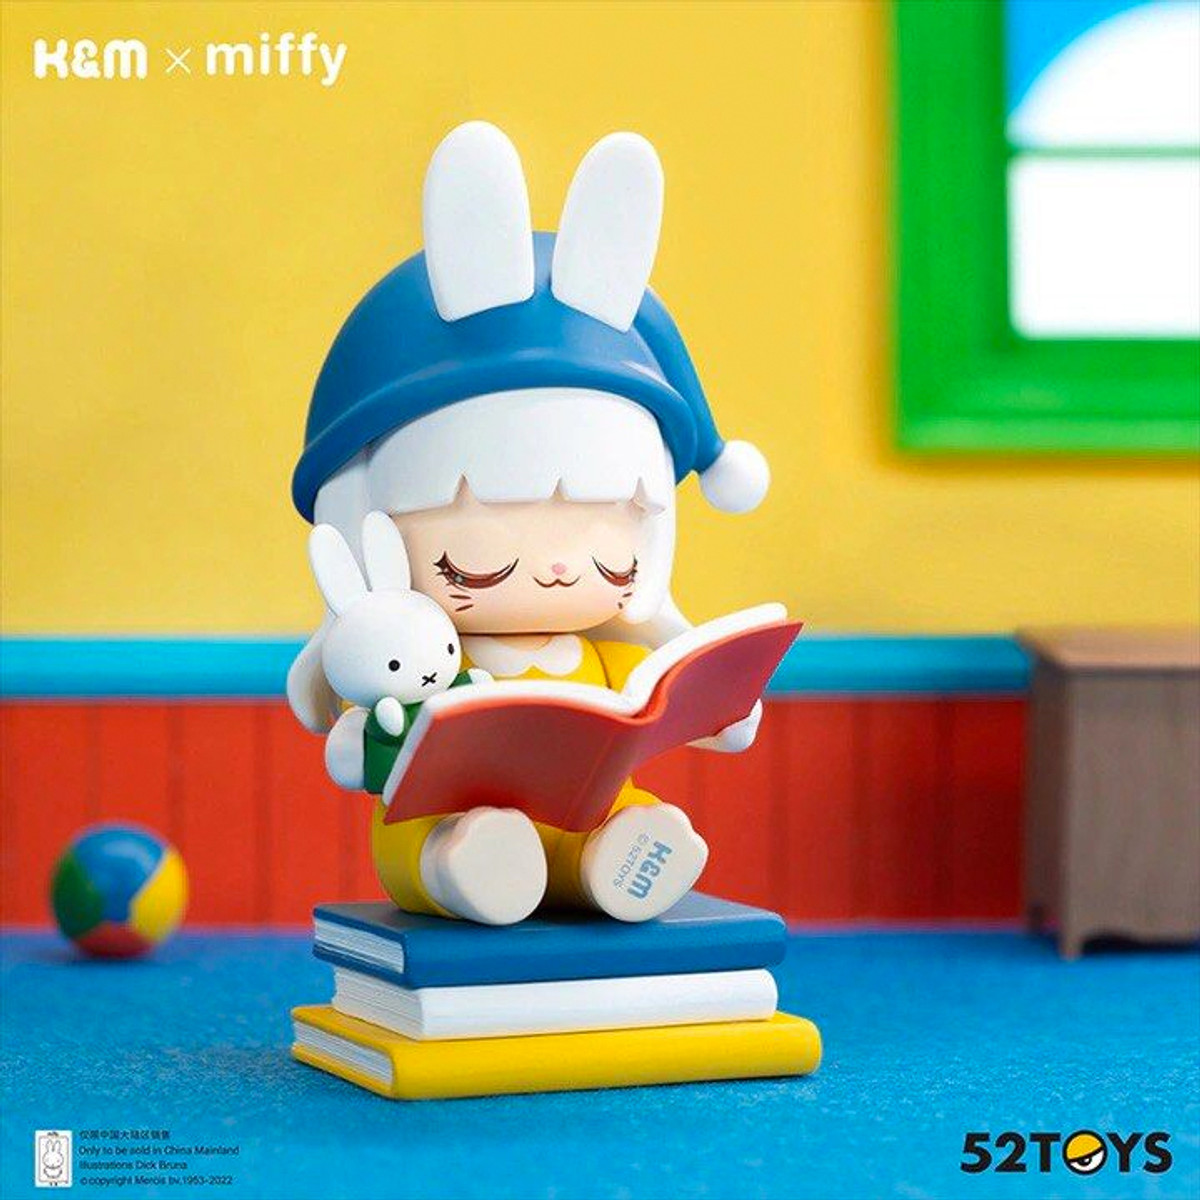 Kimmy u0026 Miki x Miffy Blind Box - myplasticheart